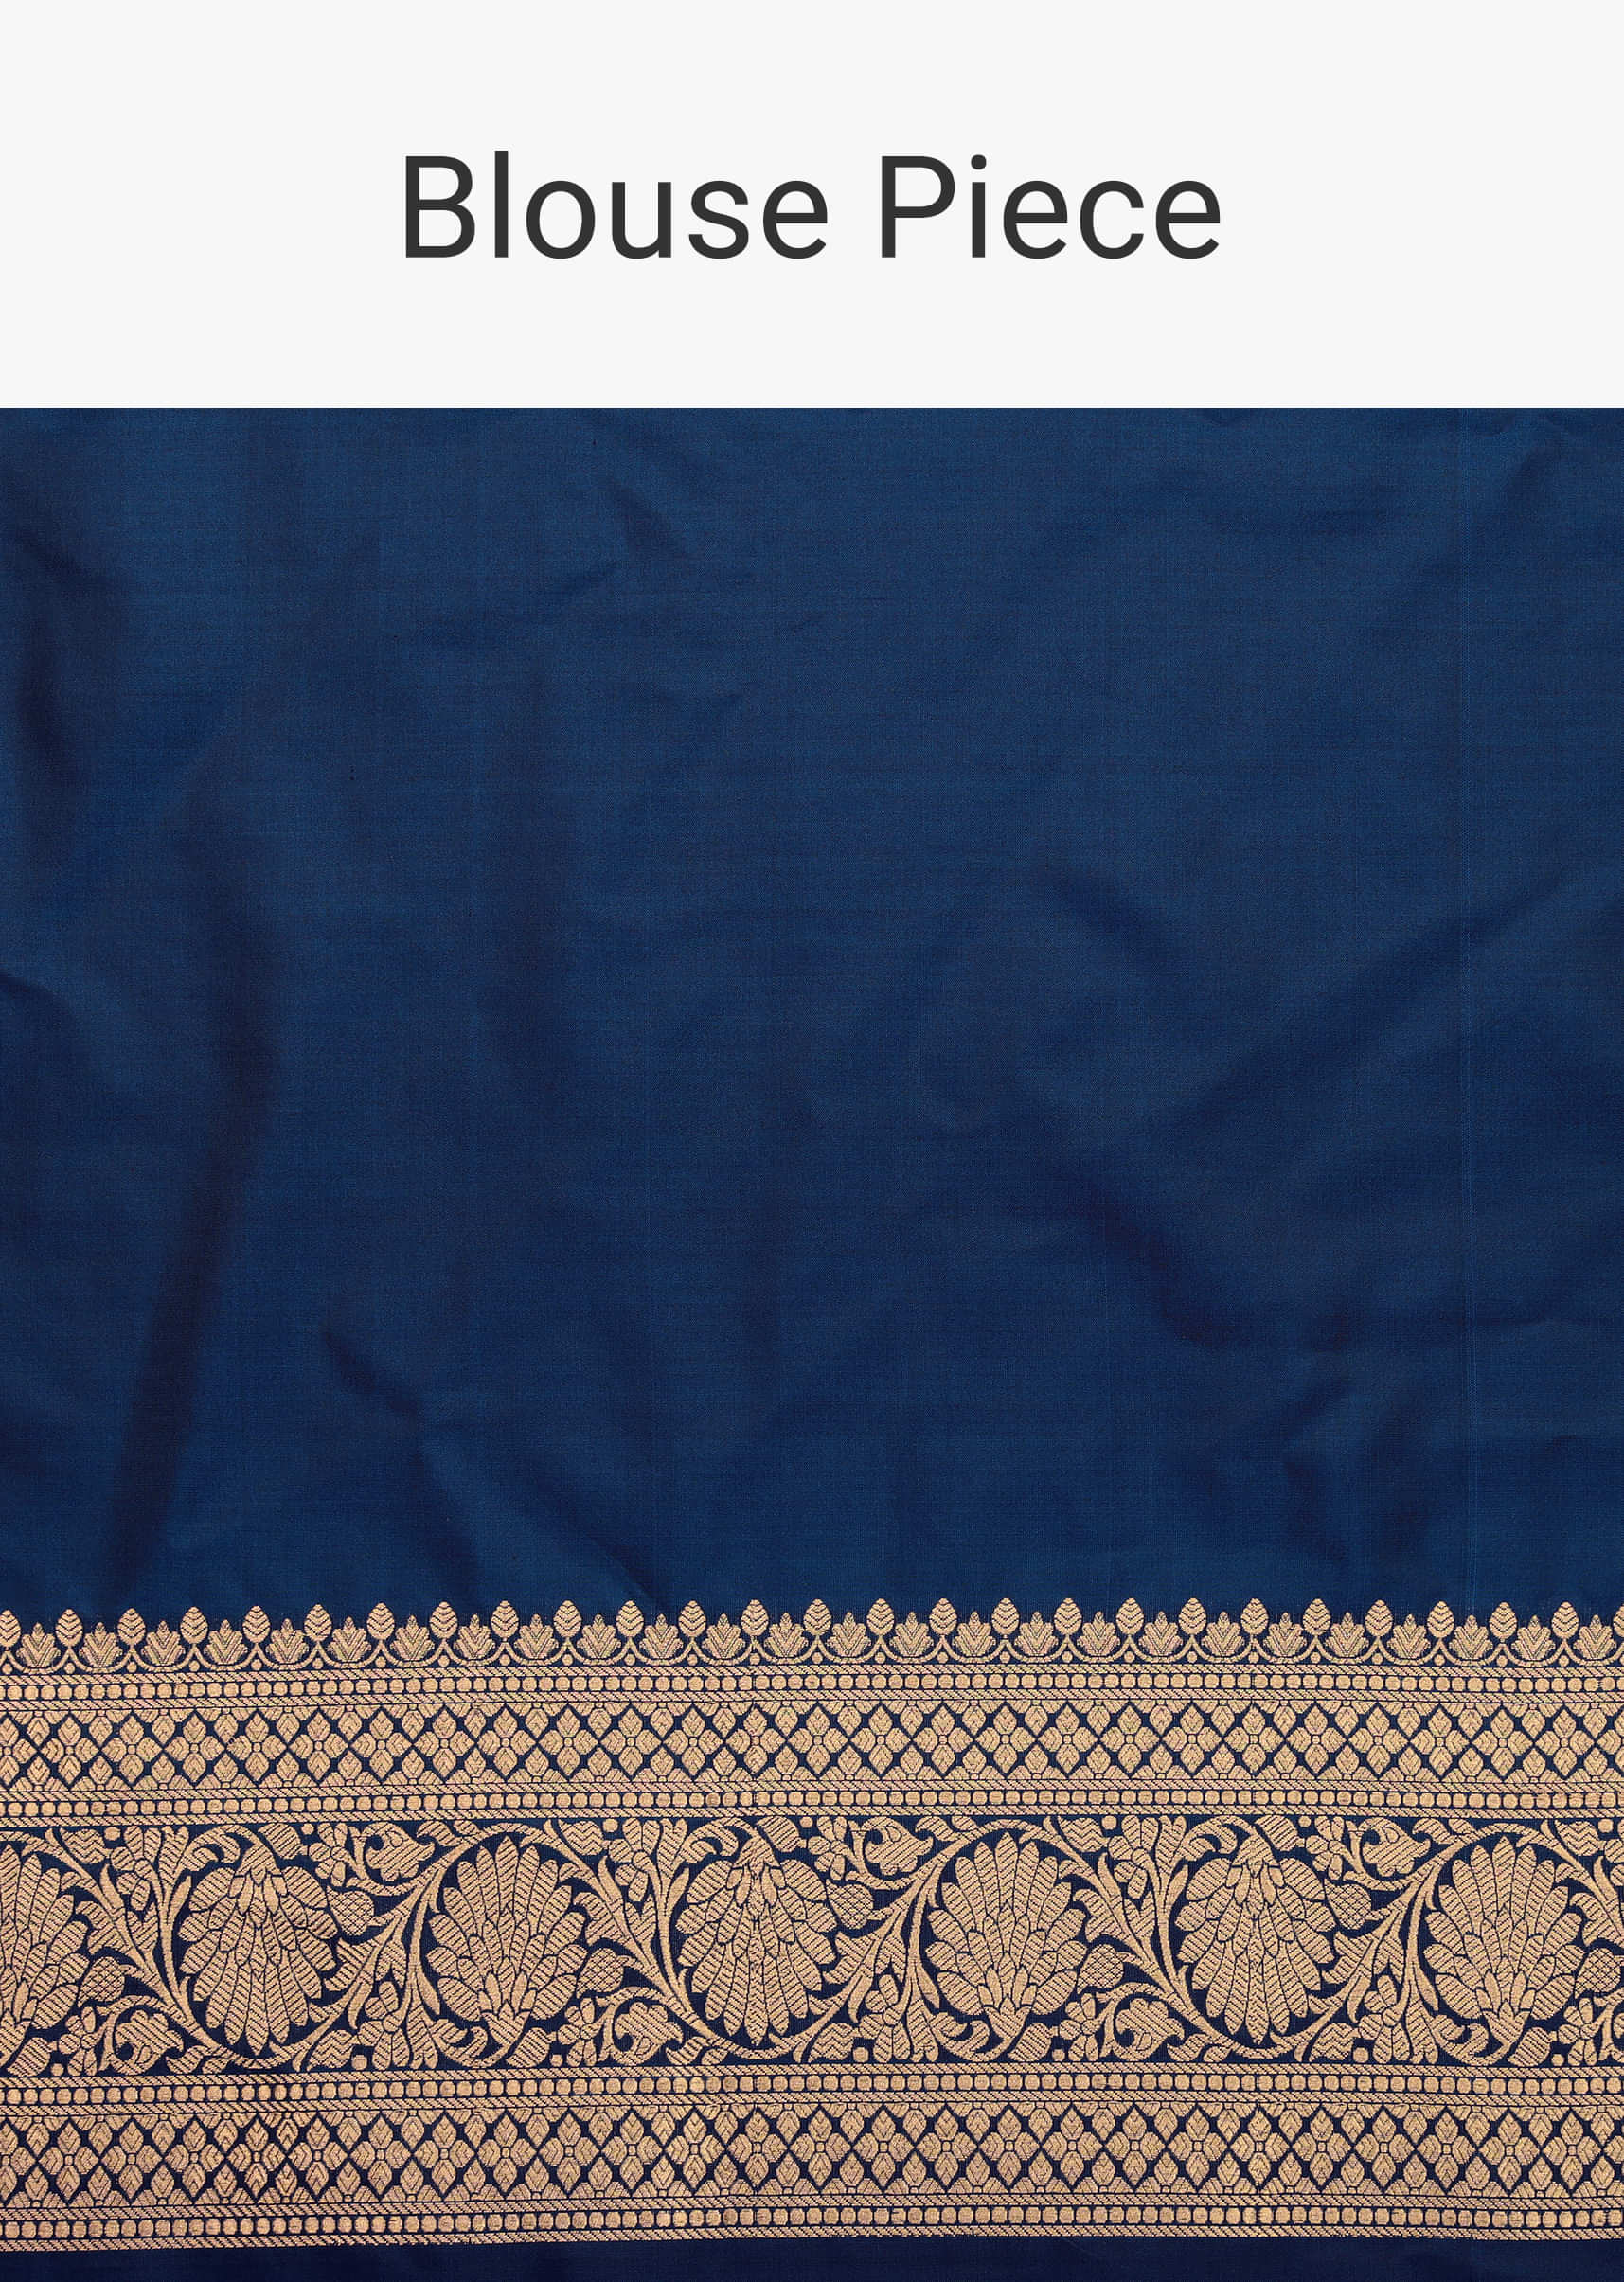 Midnight Blue Saree In Pure Banarasi Silk With Upada Zari Weave Butti Work